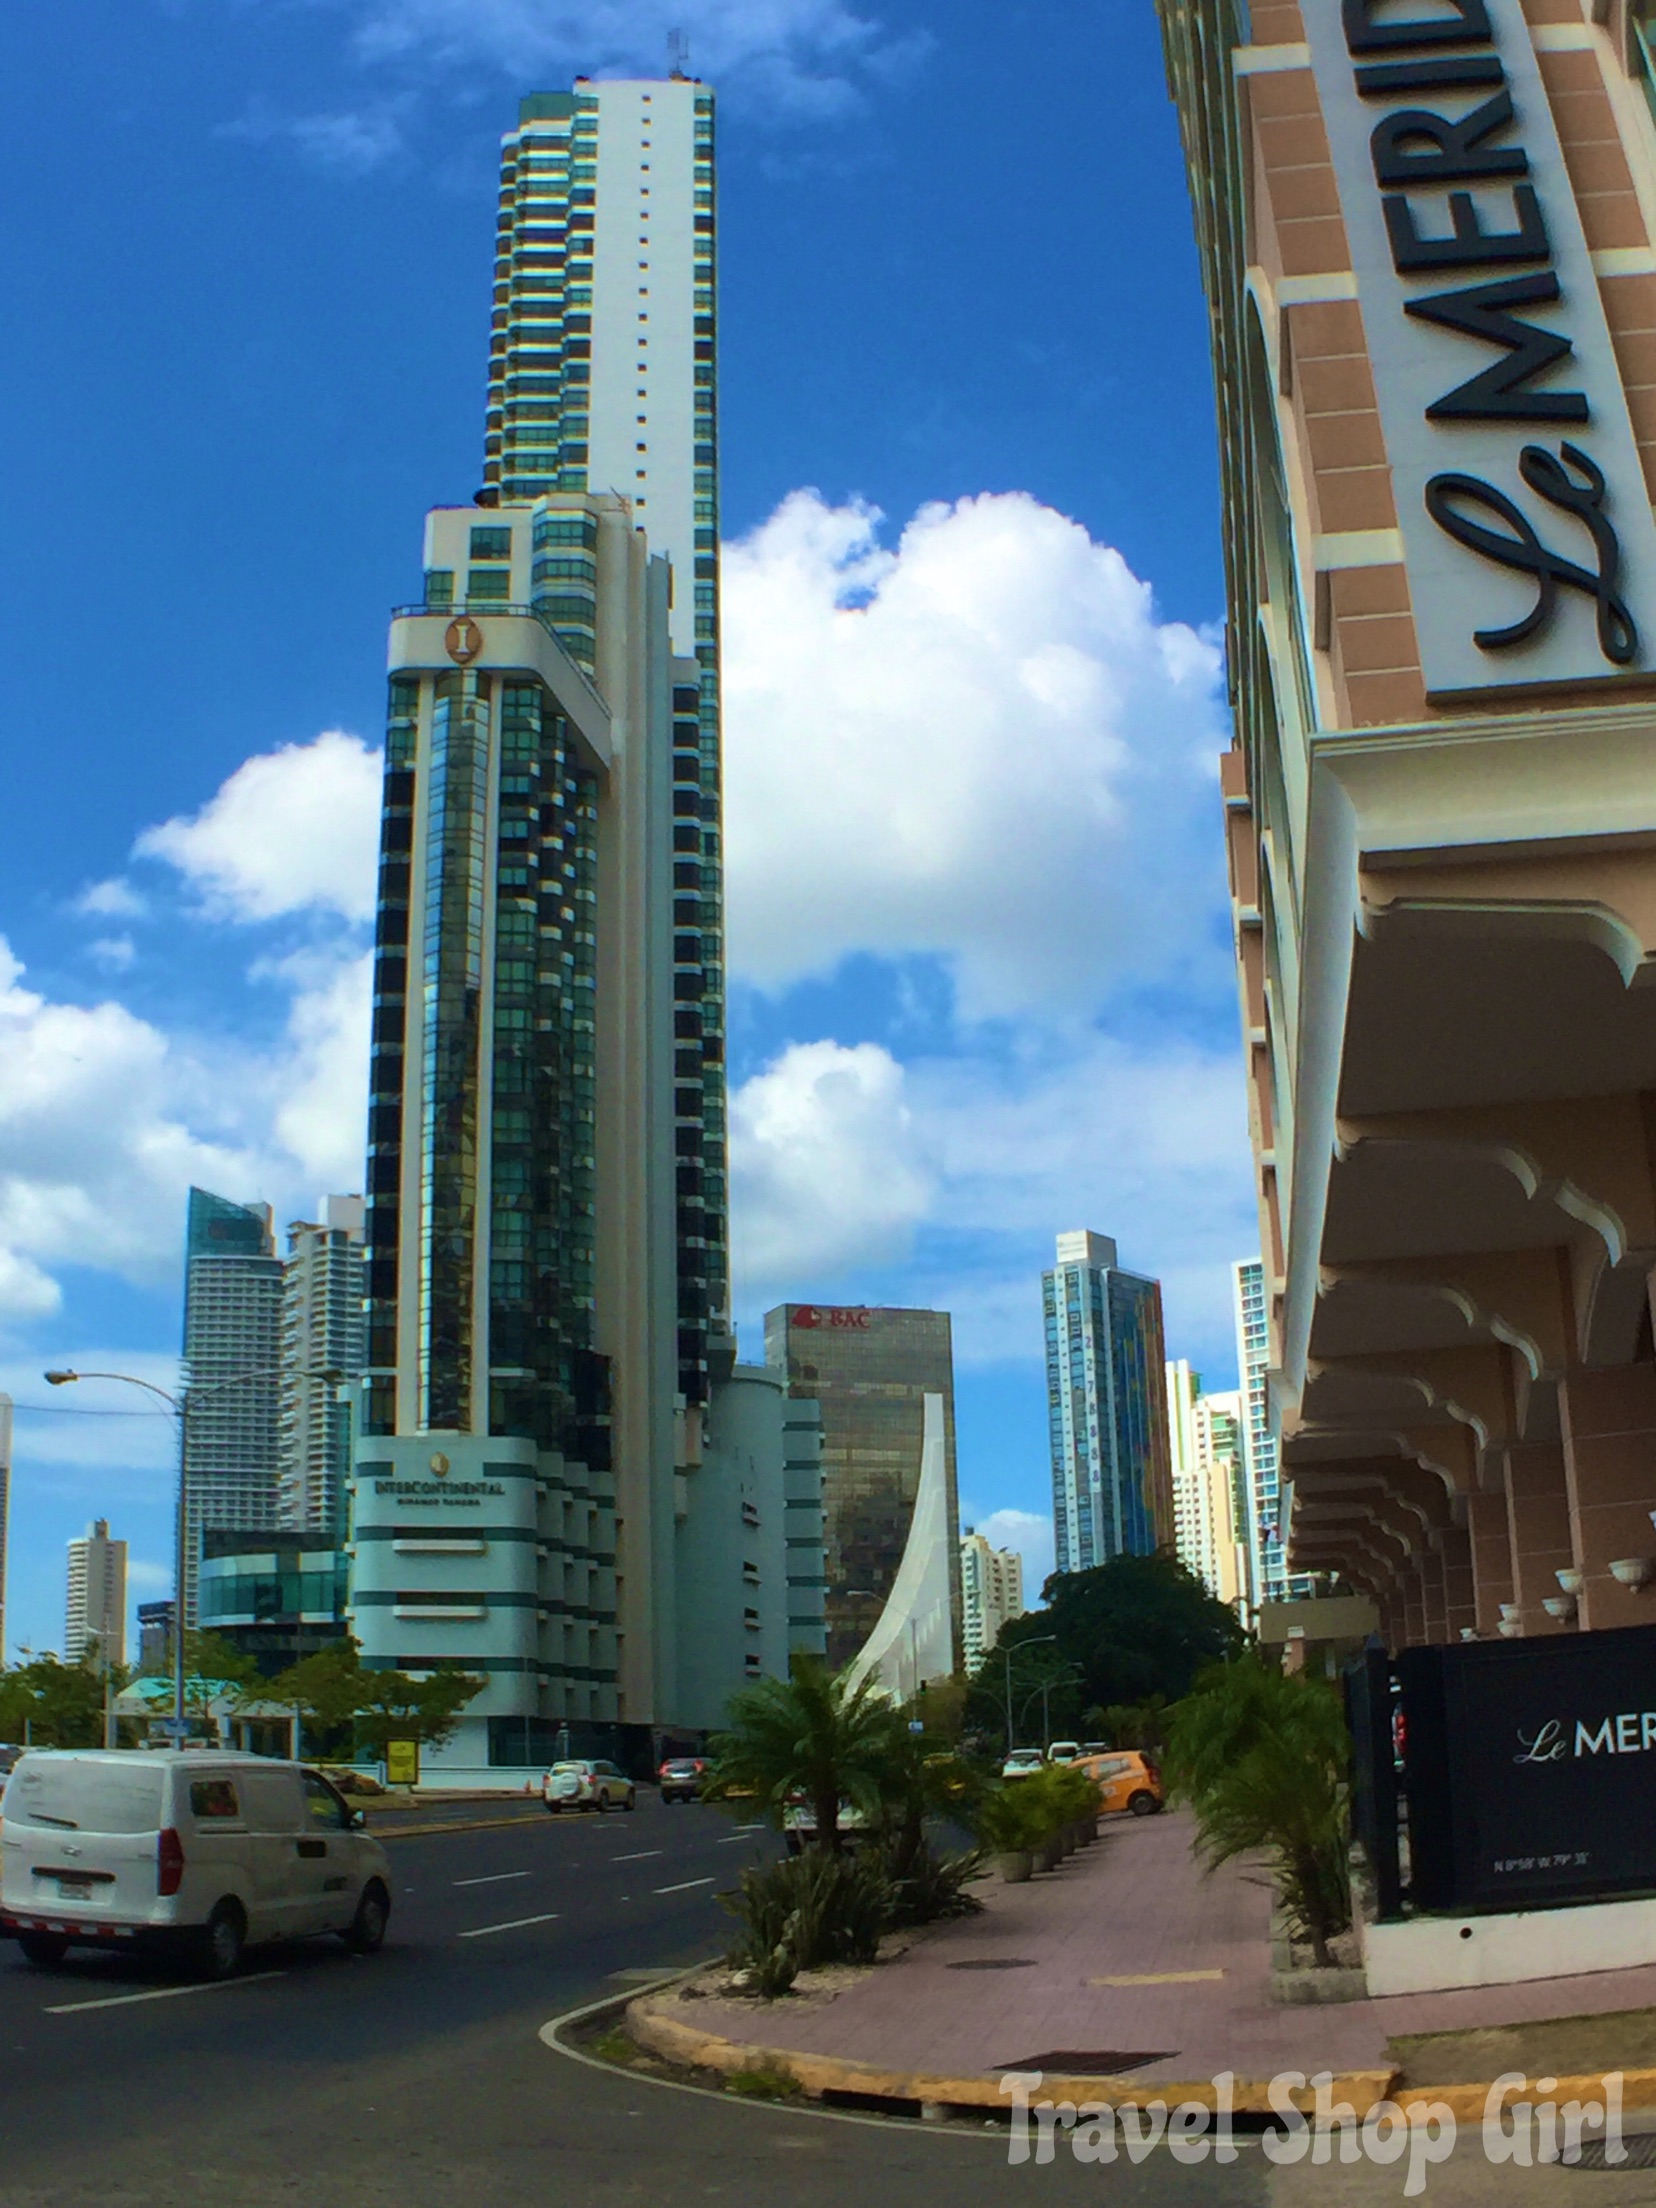 city sightseeing in Panama City